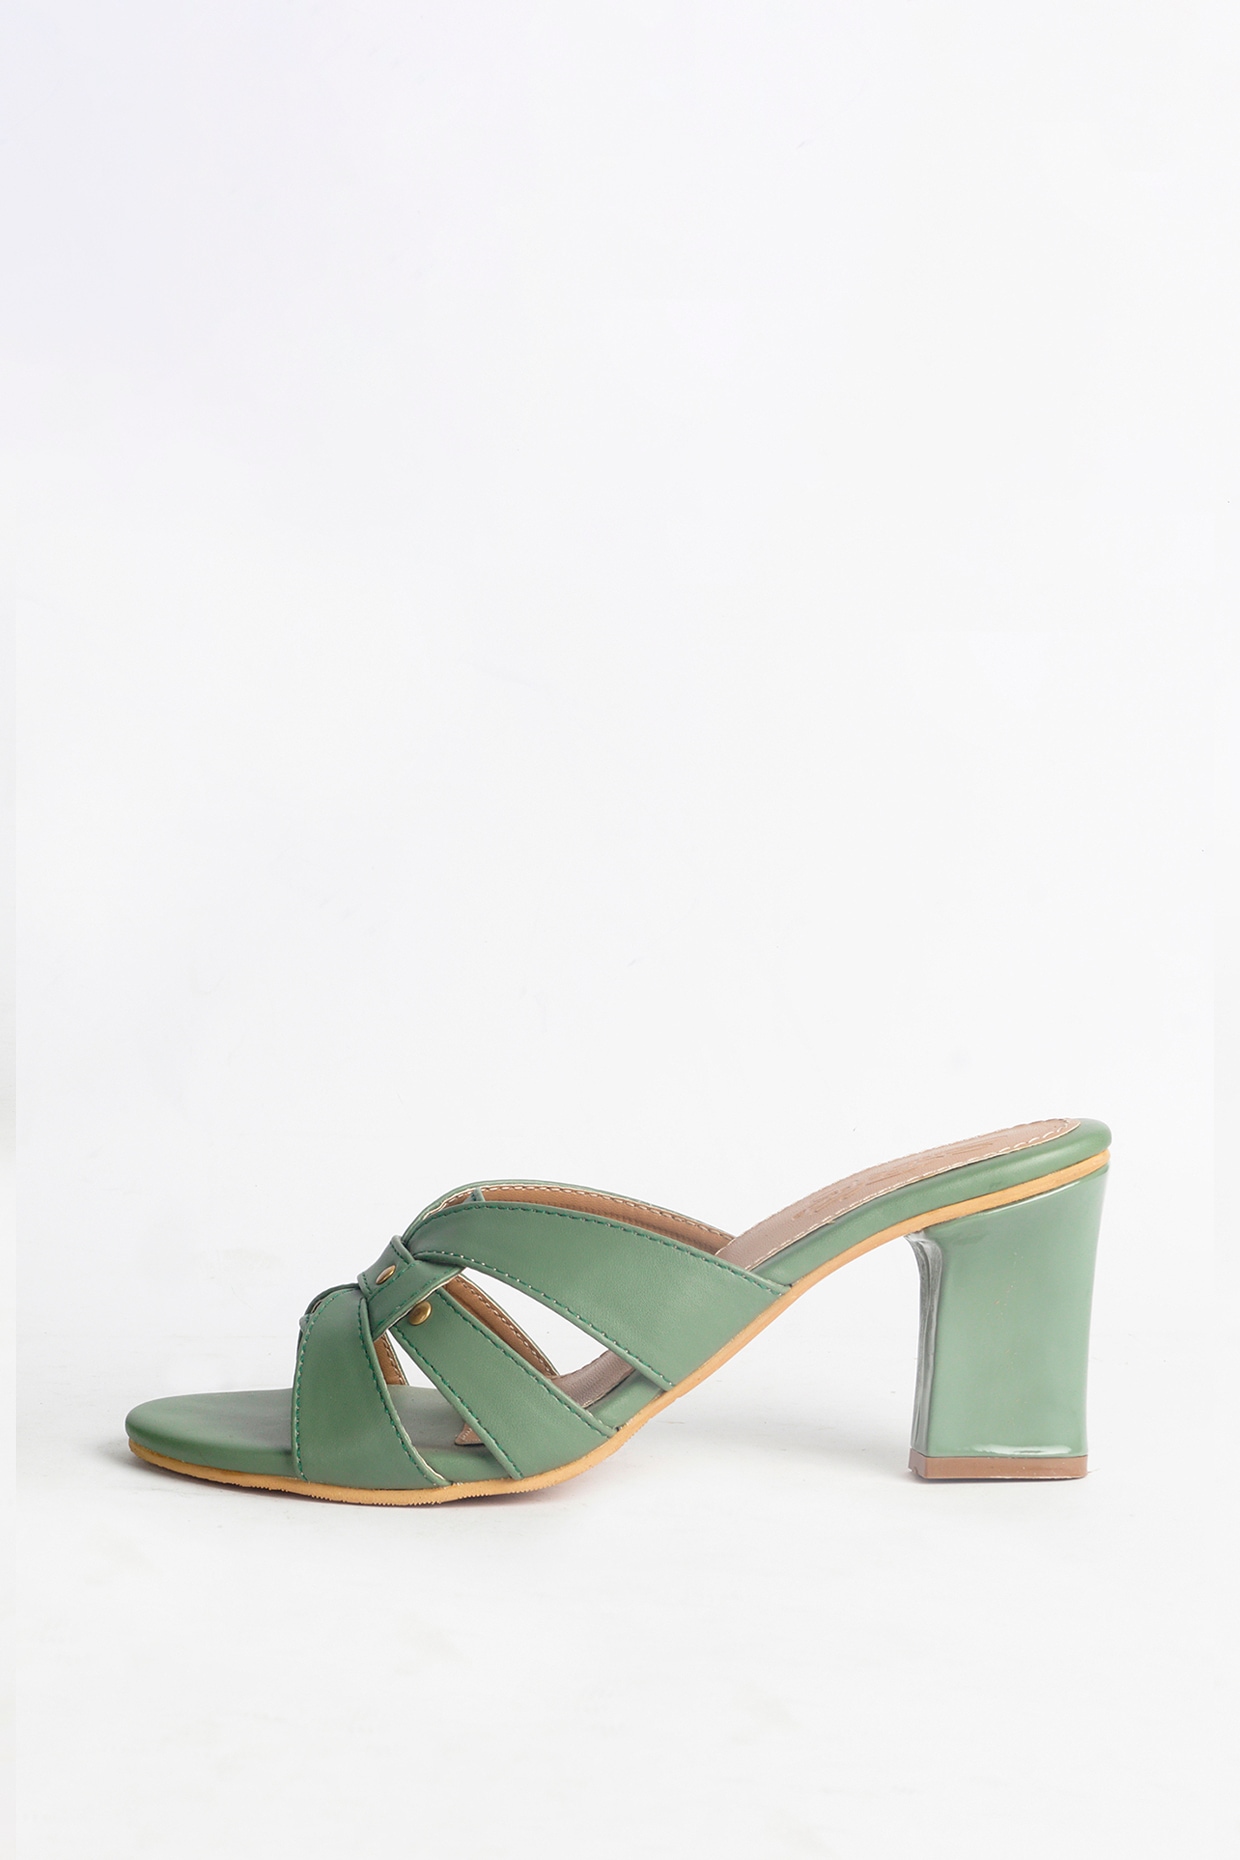 Court Couture Green Stiletto heels Women's size 6(s)